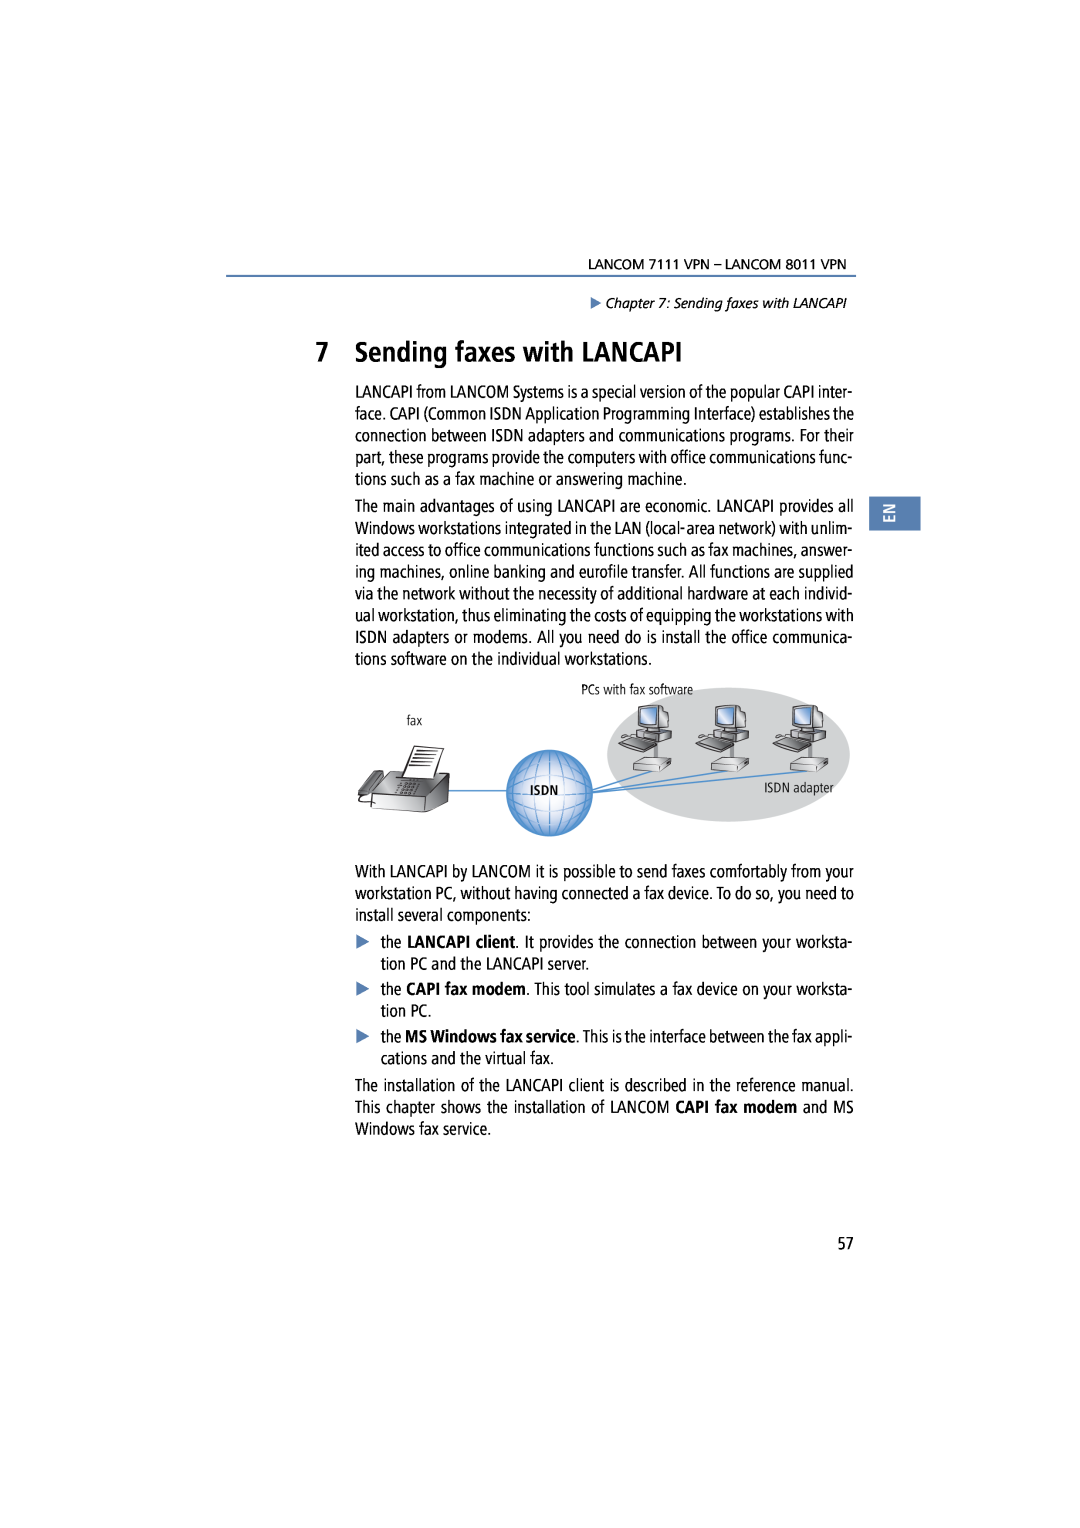 Lancom Systems 7111 VPN, 8011 VPN manual Sending faxes with LANCAPI 